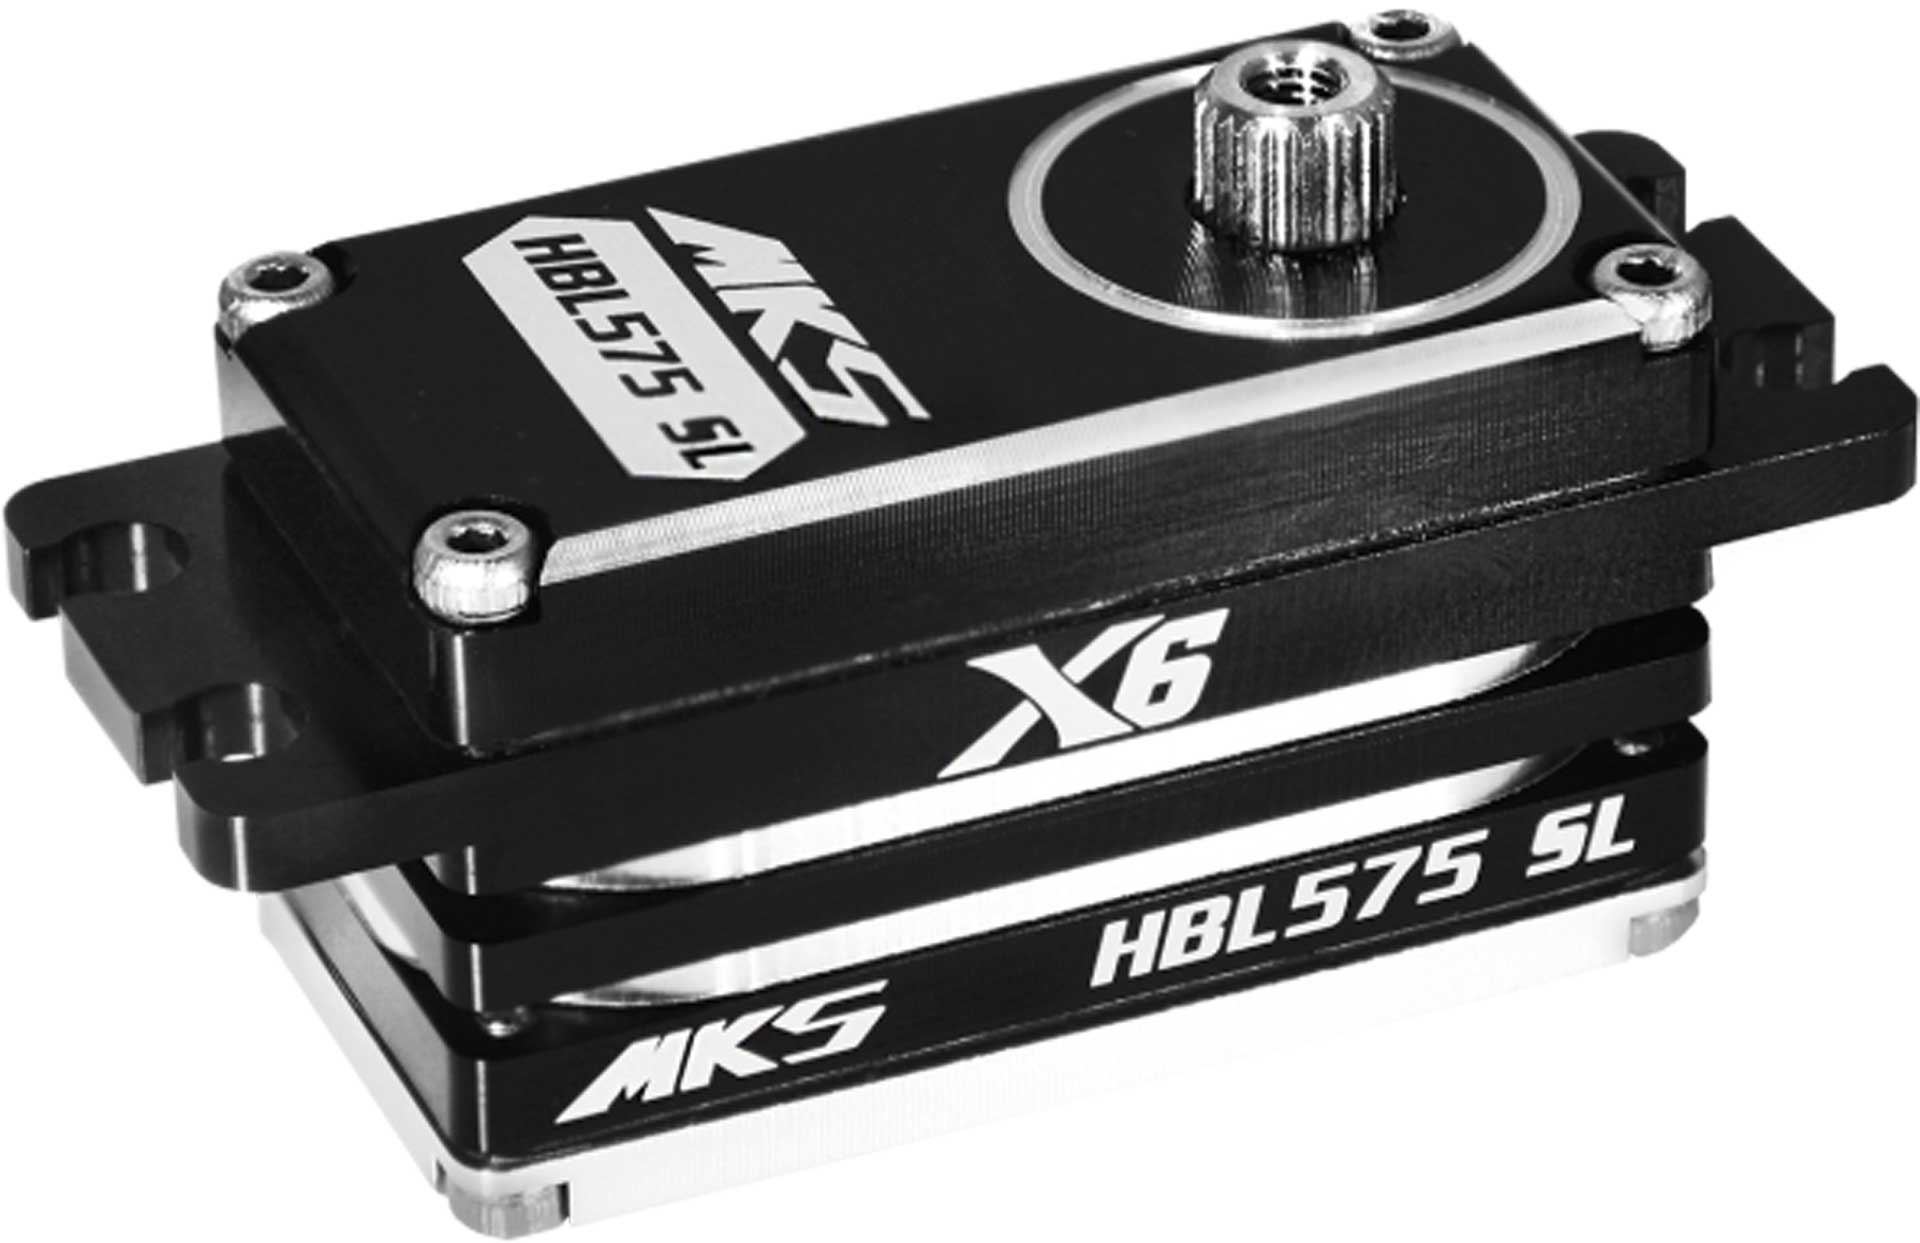 MKS HBL575SL HV Digital Servo brushless X6 Serie - kurzes Kabel für RC Cars